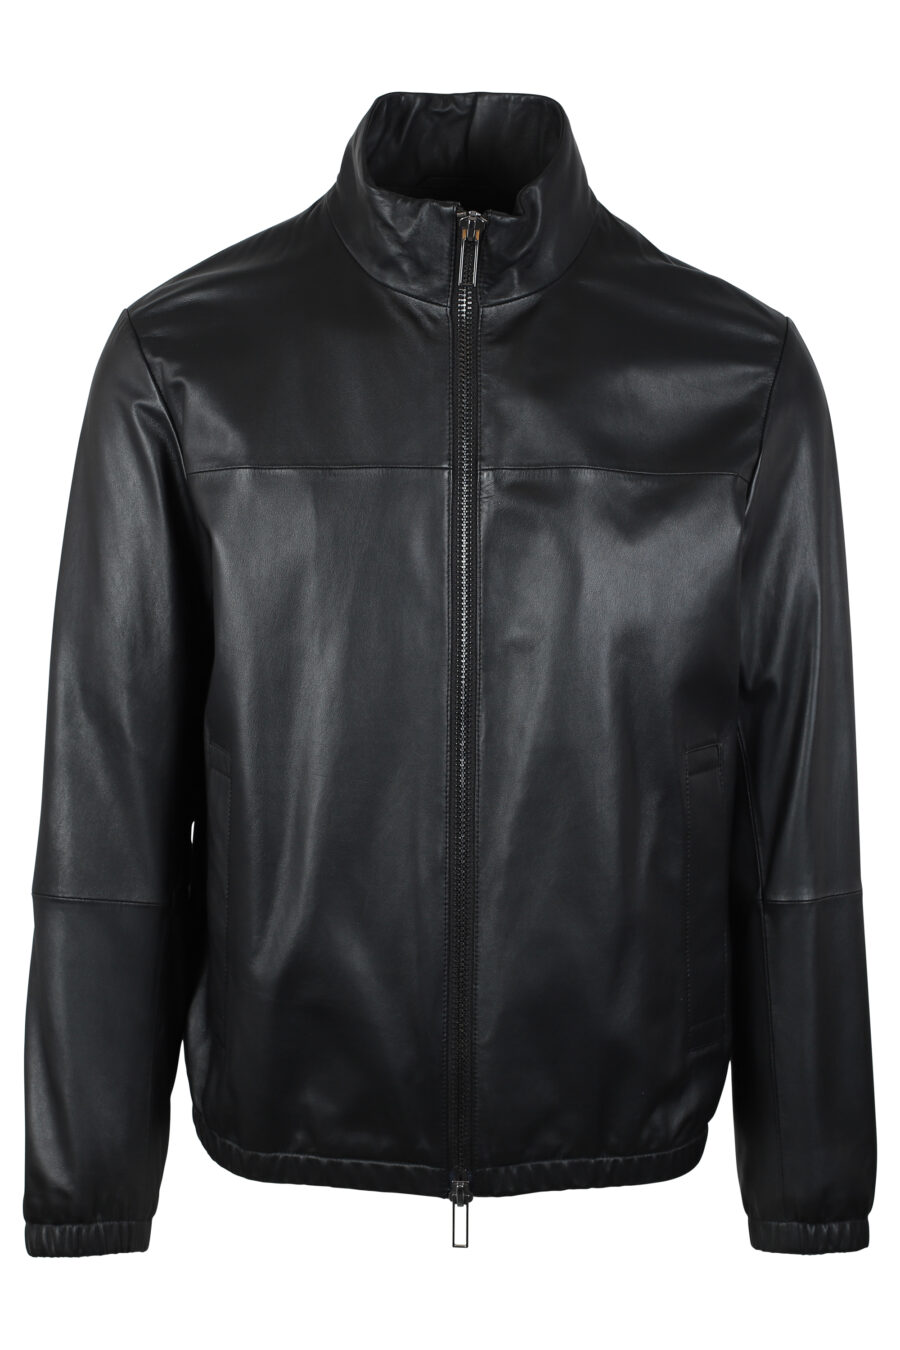 Veste en cuir noir avec mini-logo - IMG 4658